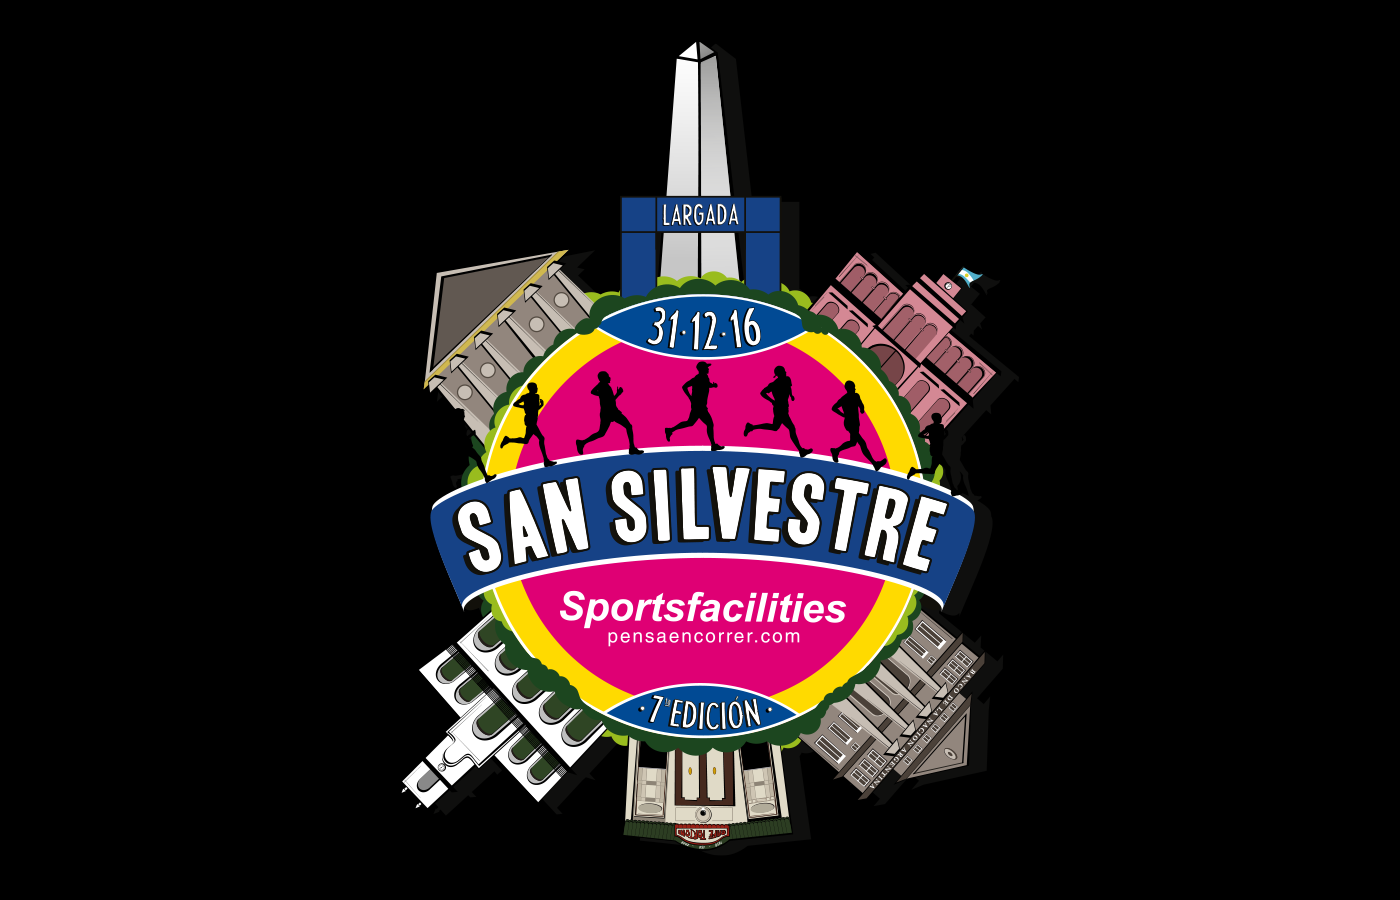 San Silvestre Buenos Aires 2016 con muchas sorpresas